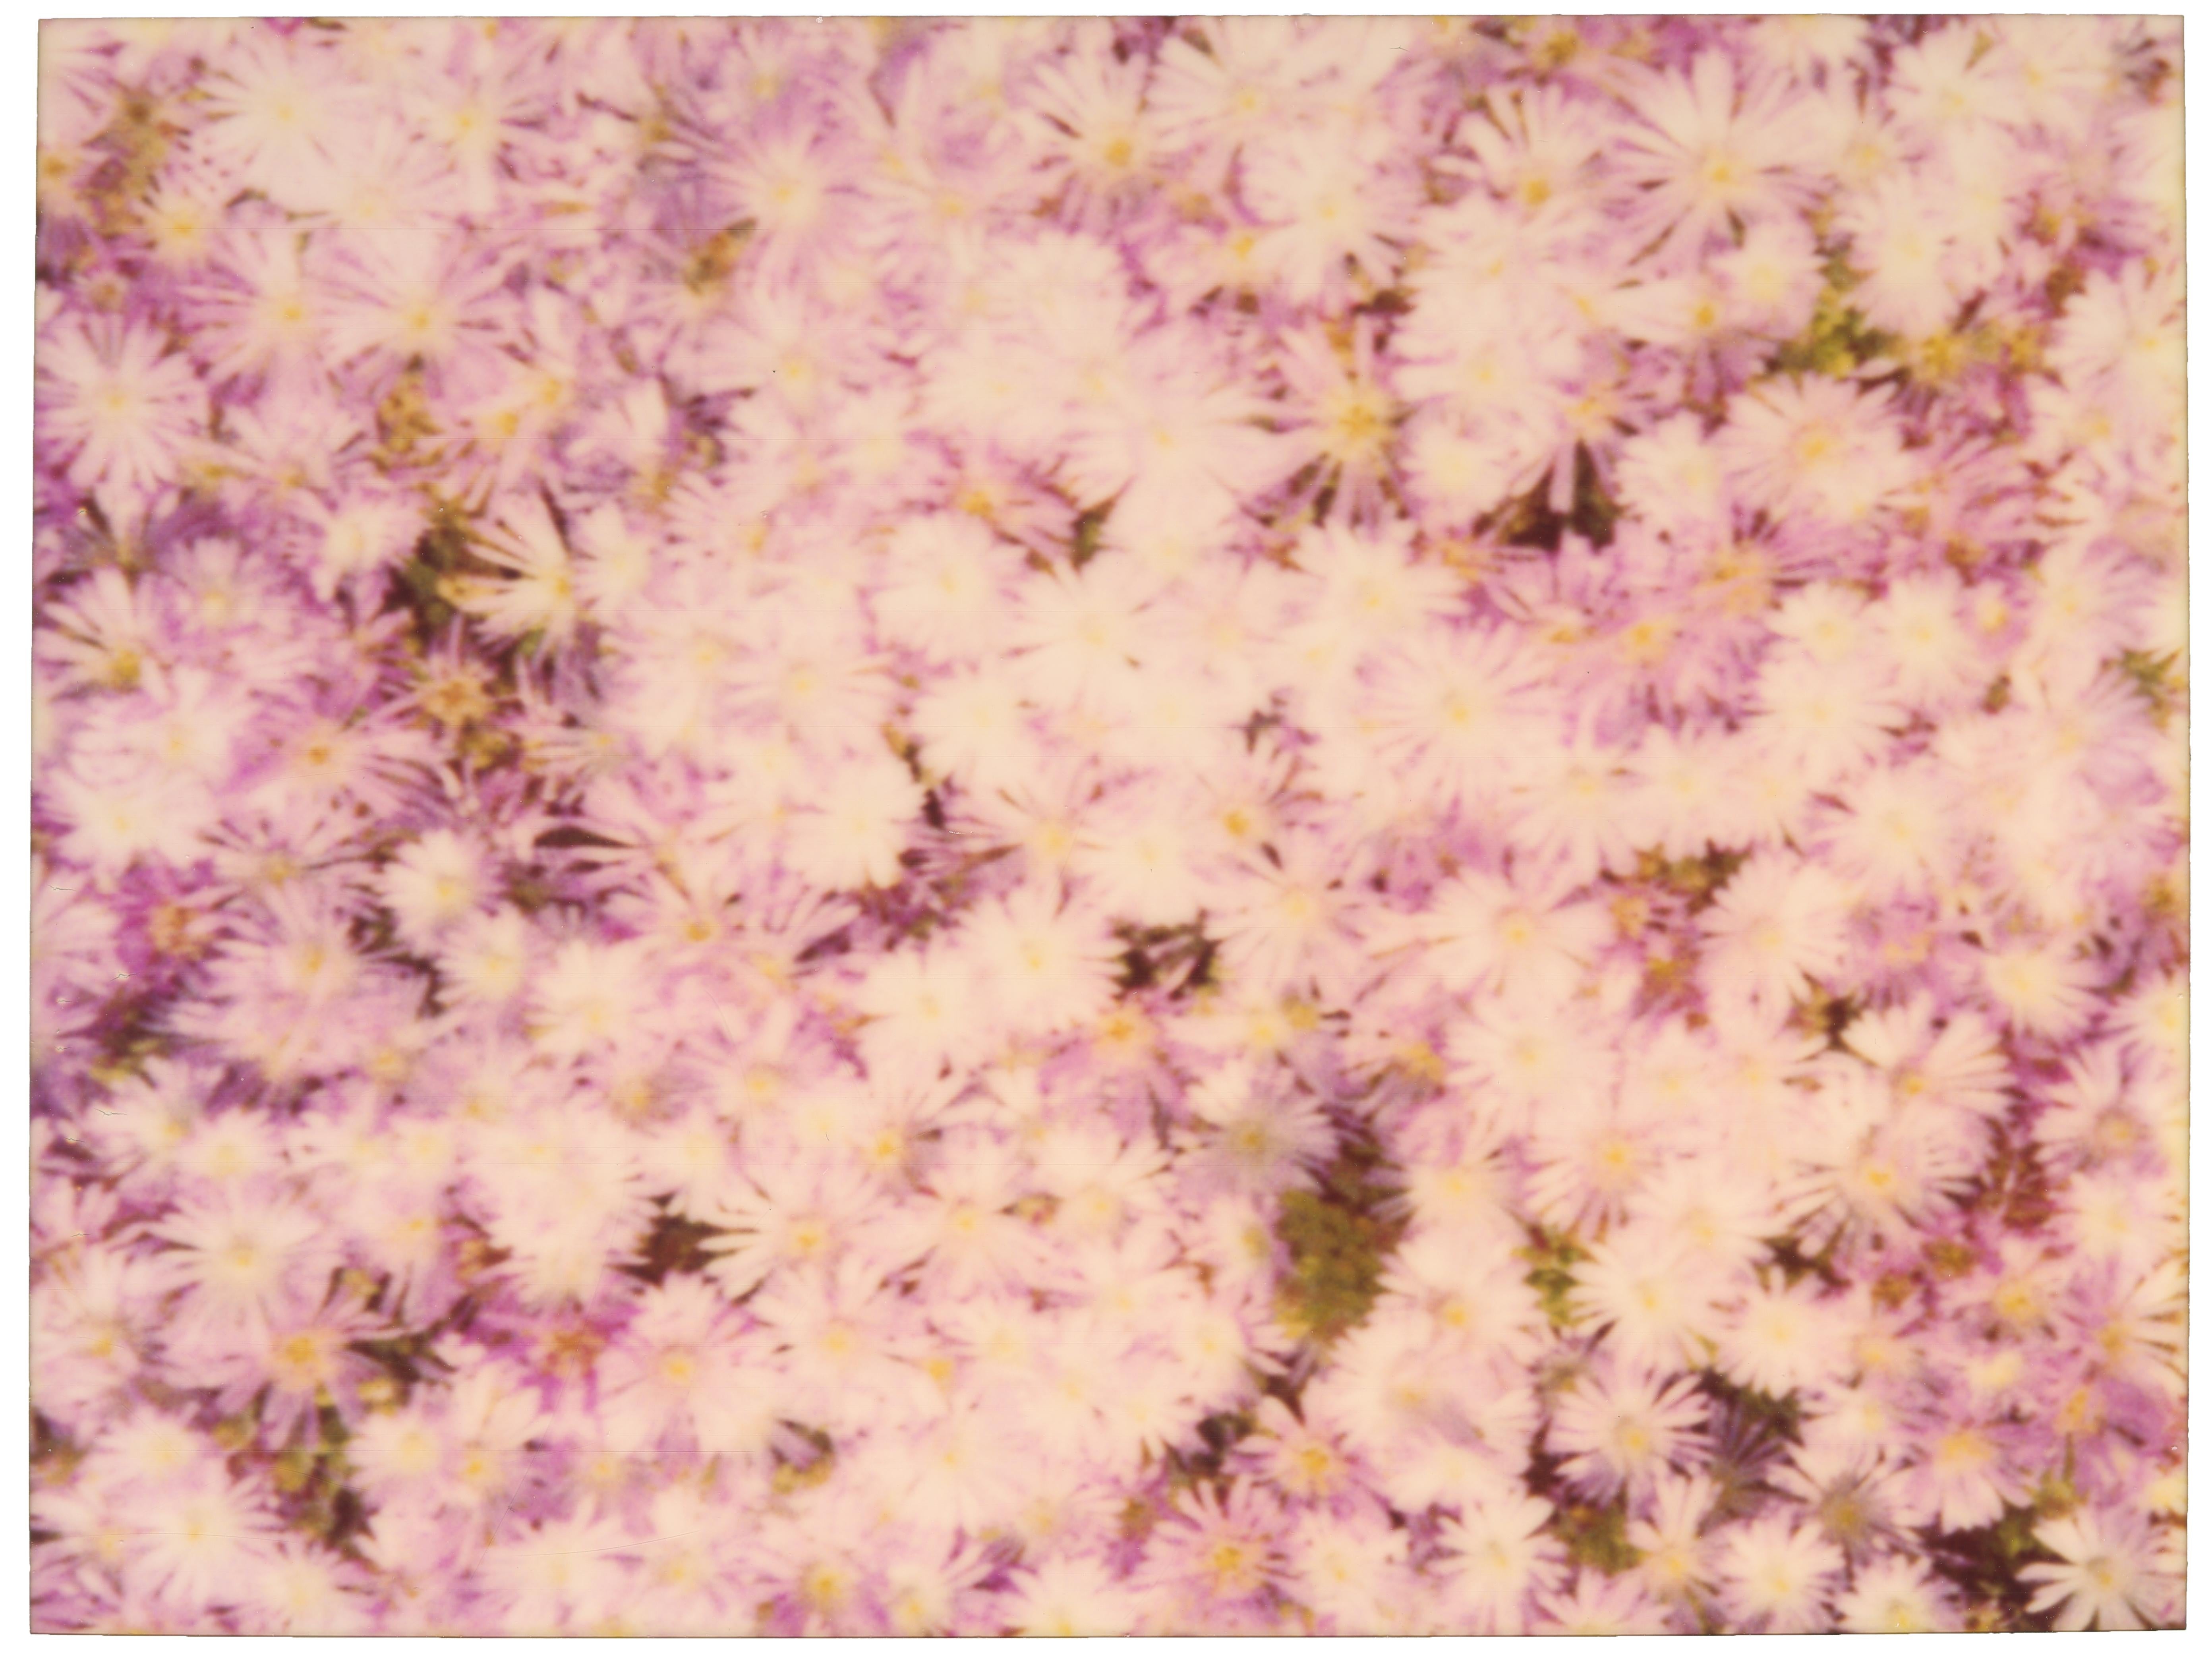 Stefanie Schneider Color Photograph - Pink Flower Carpet (Zuma Beach) - analog, vintage print